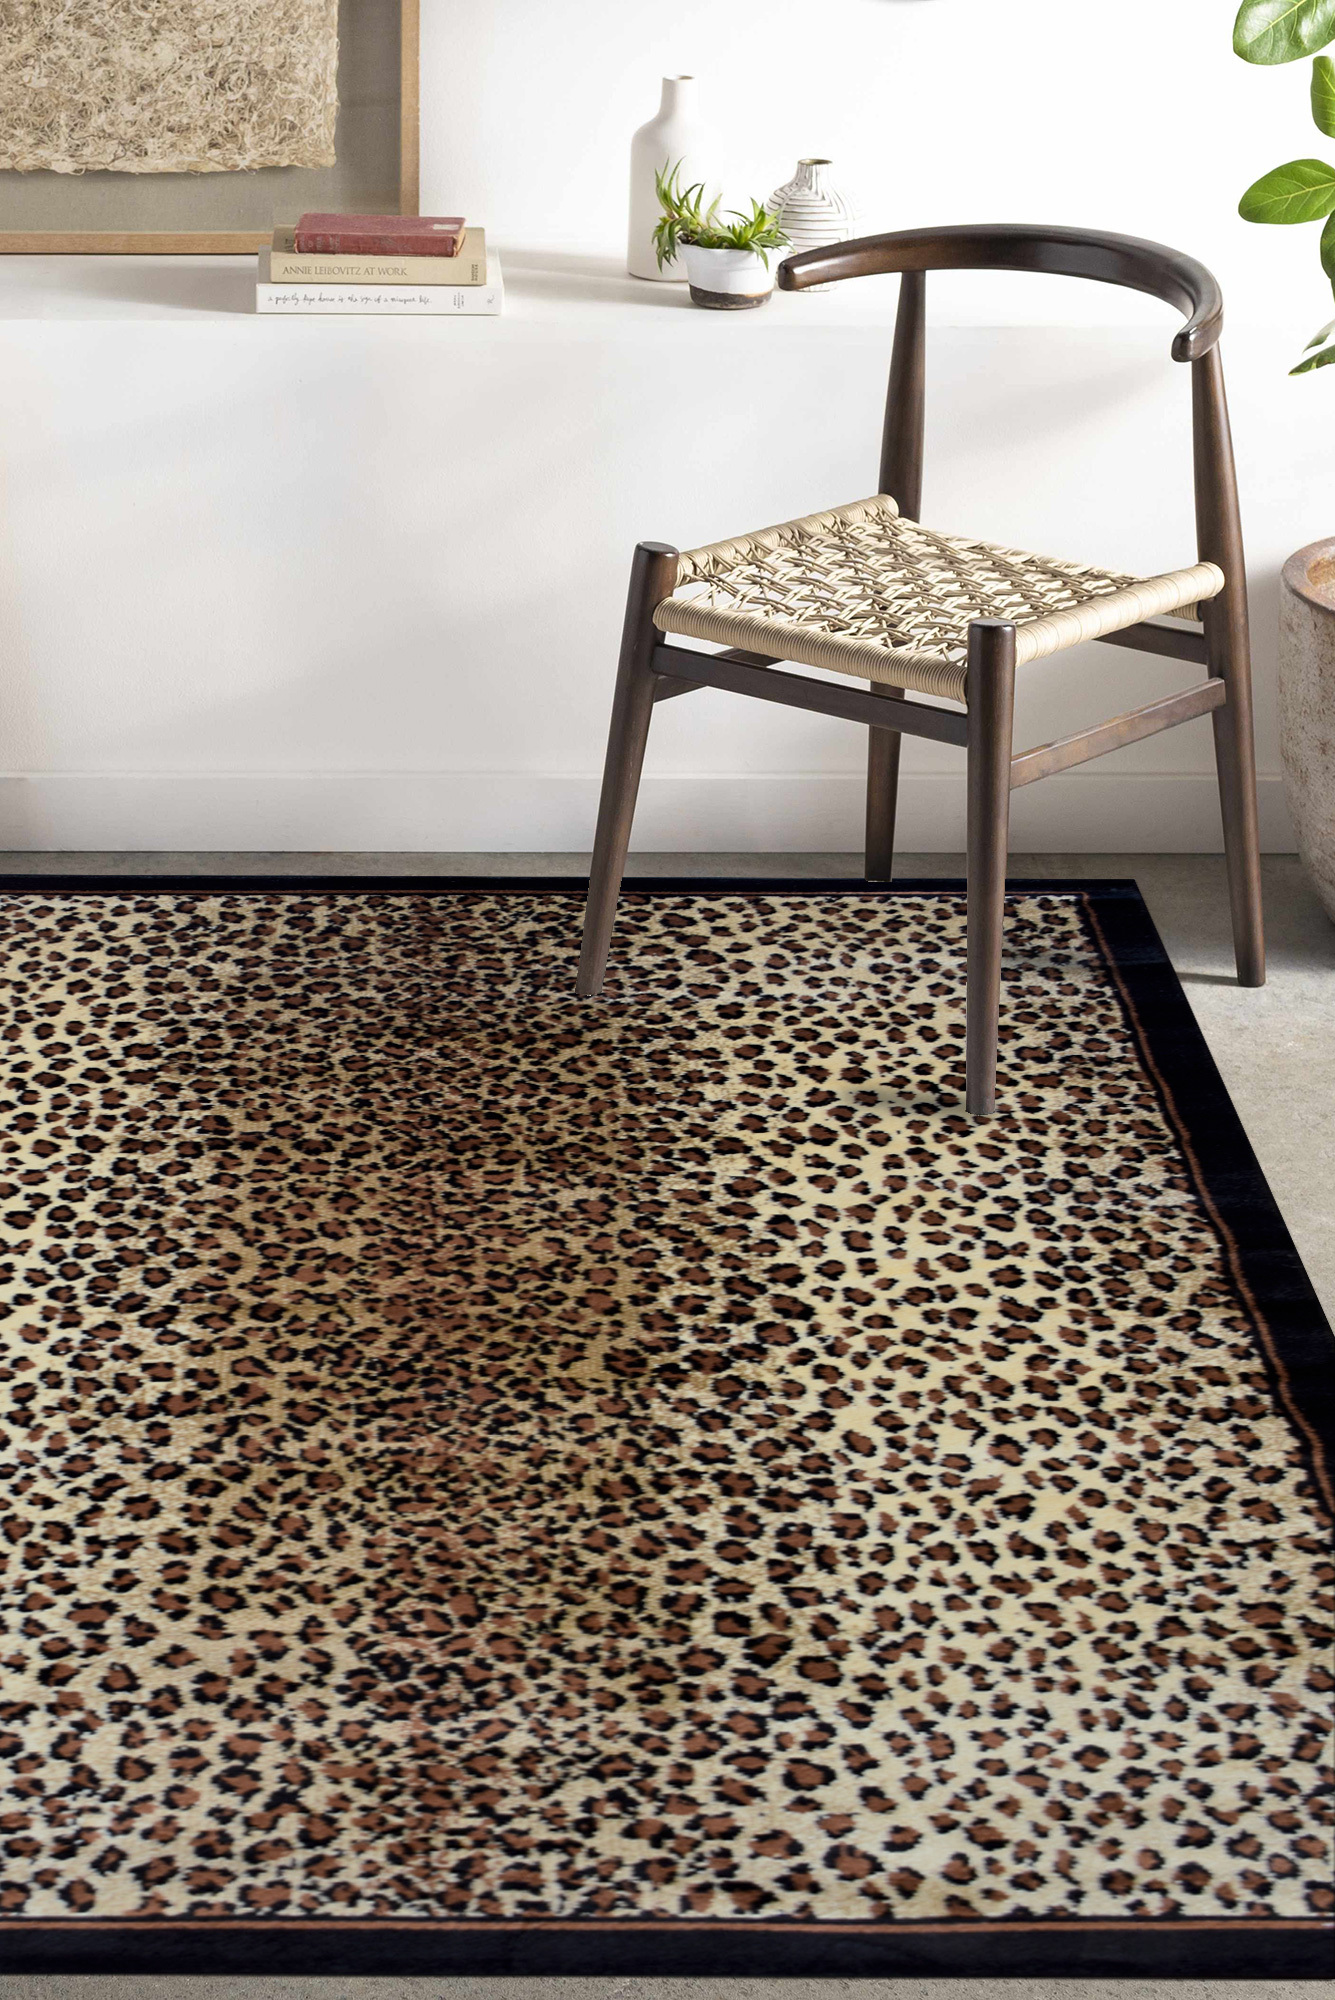 Better Bathrooms ORIGINAL ANIMAL THEME CARPETS 'FLASH' SAFARI Print Area CHEAP Rugs Carpet 